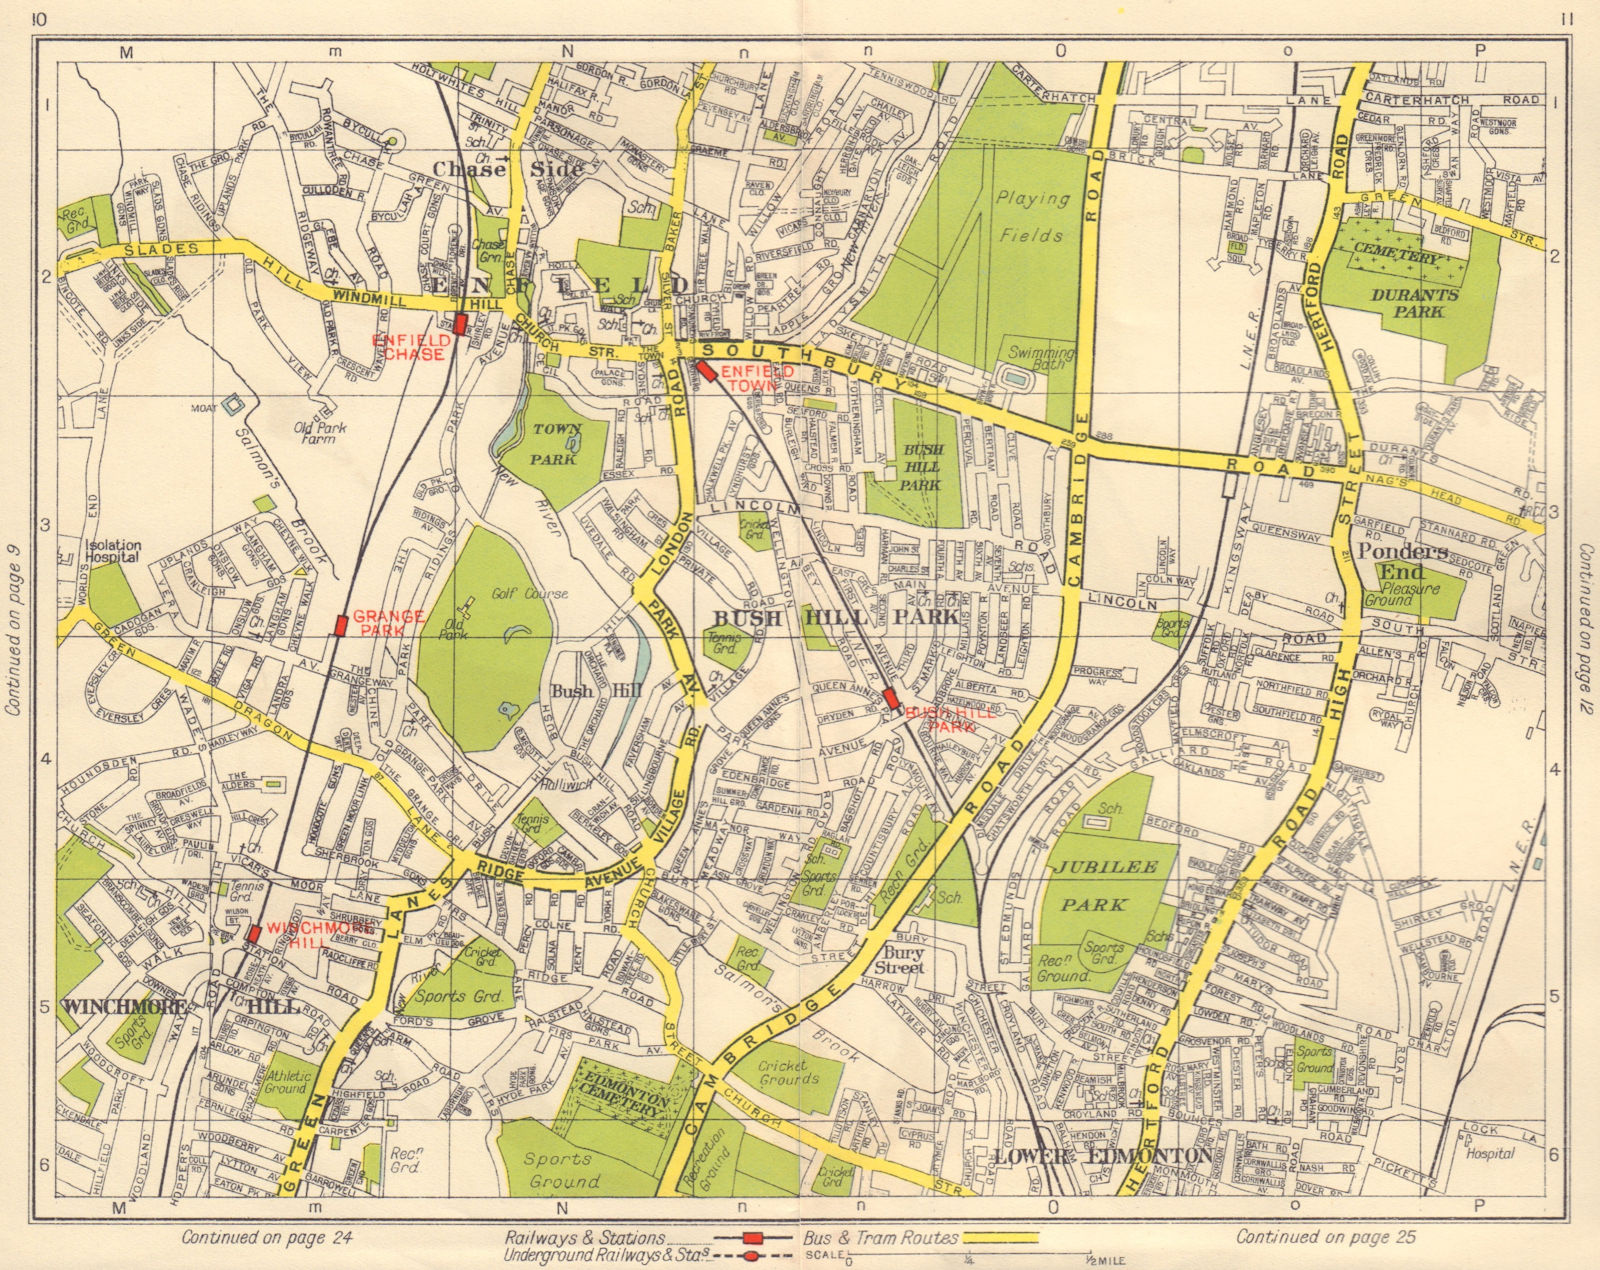 N LONDON. Enfield Ponder's End Edmonton Winchmore Hill Bush Hill Park 1948 map